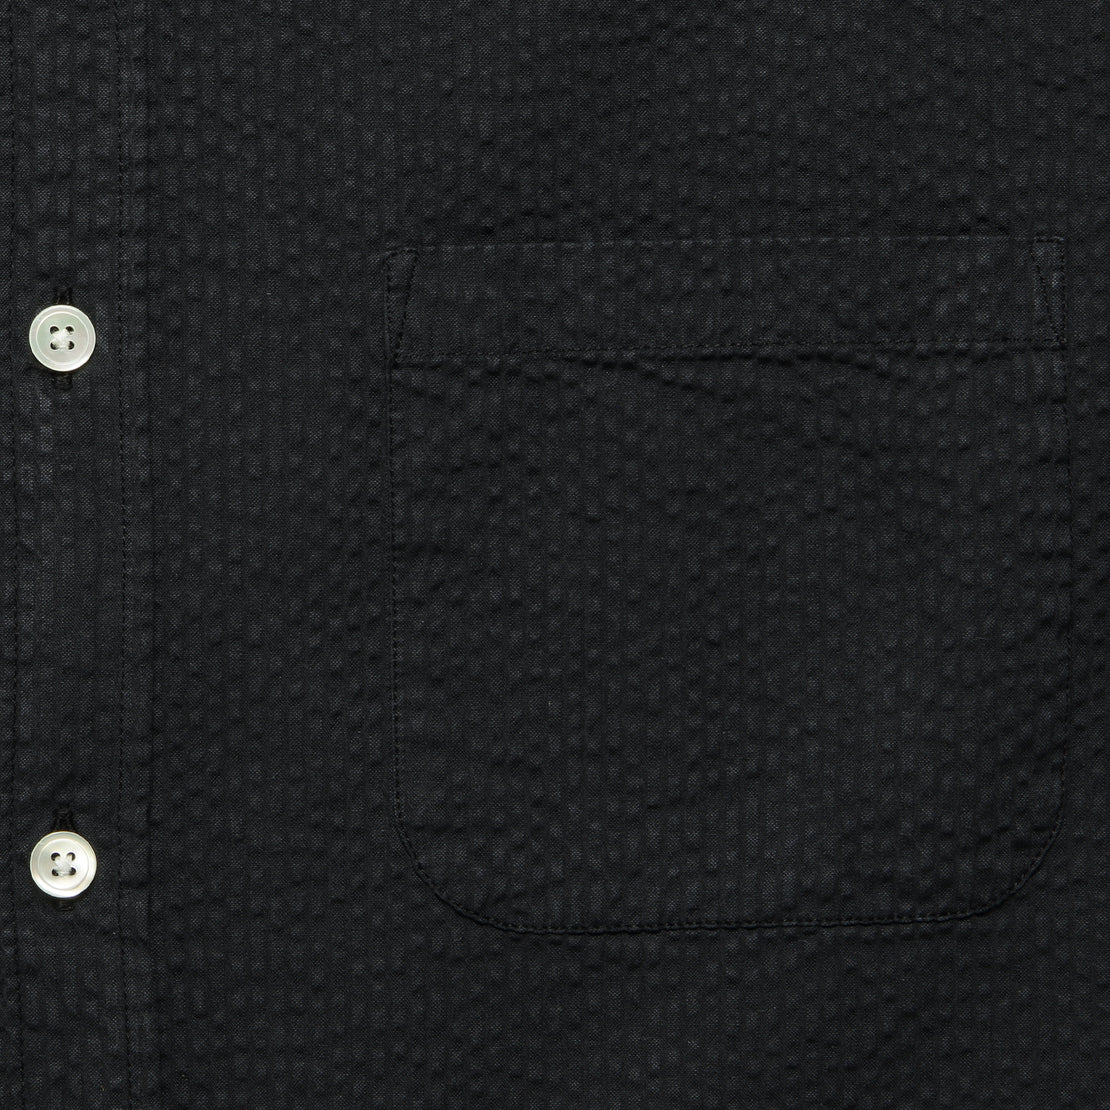 Atlantico Seersucker Shirt - Black - Portuguese Flannel - STAG Provisions - Tops - S/S Woven - Seersucker